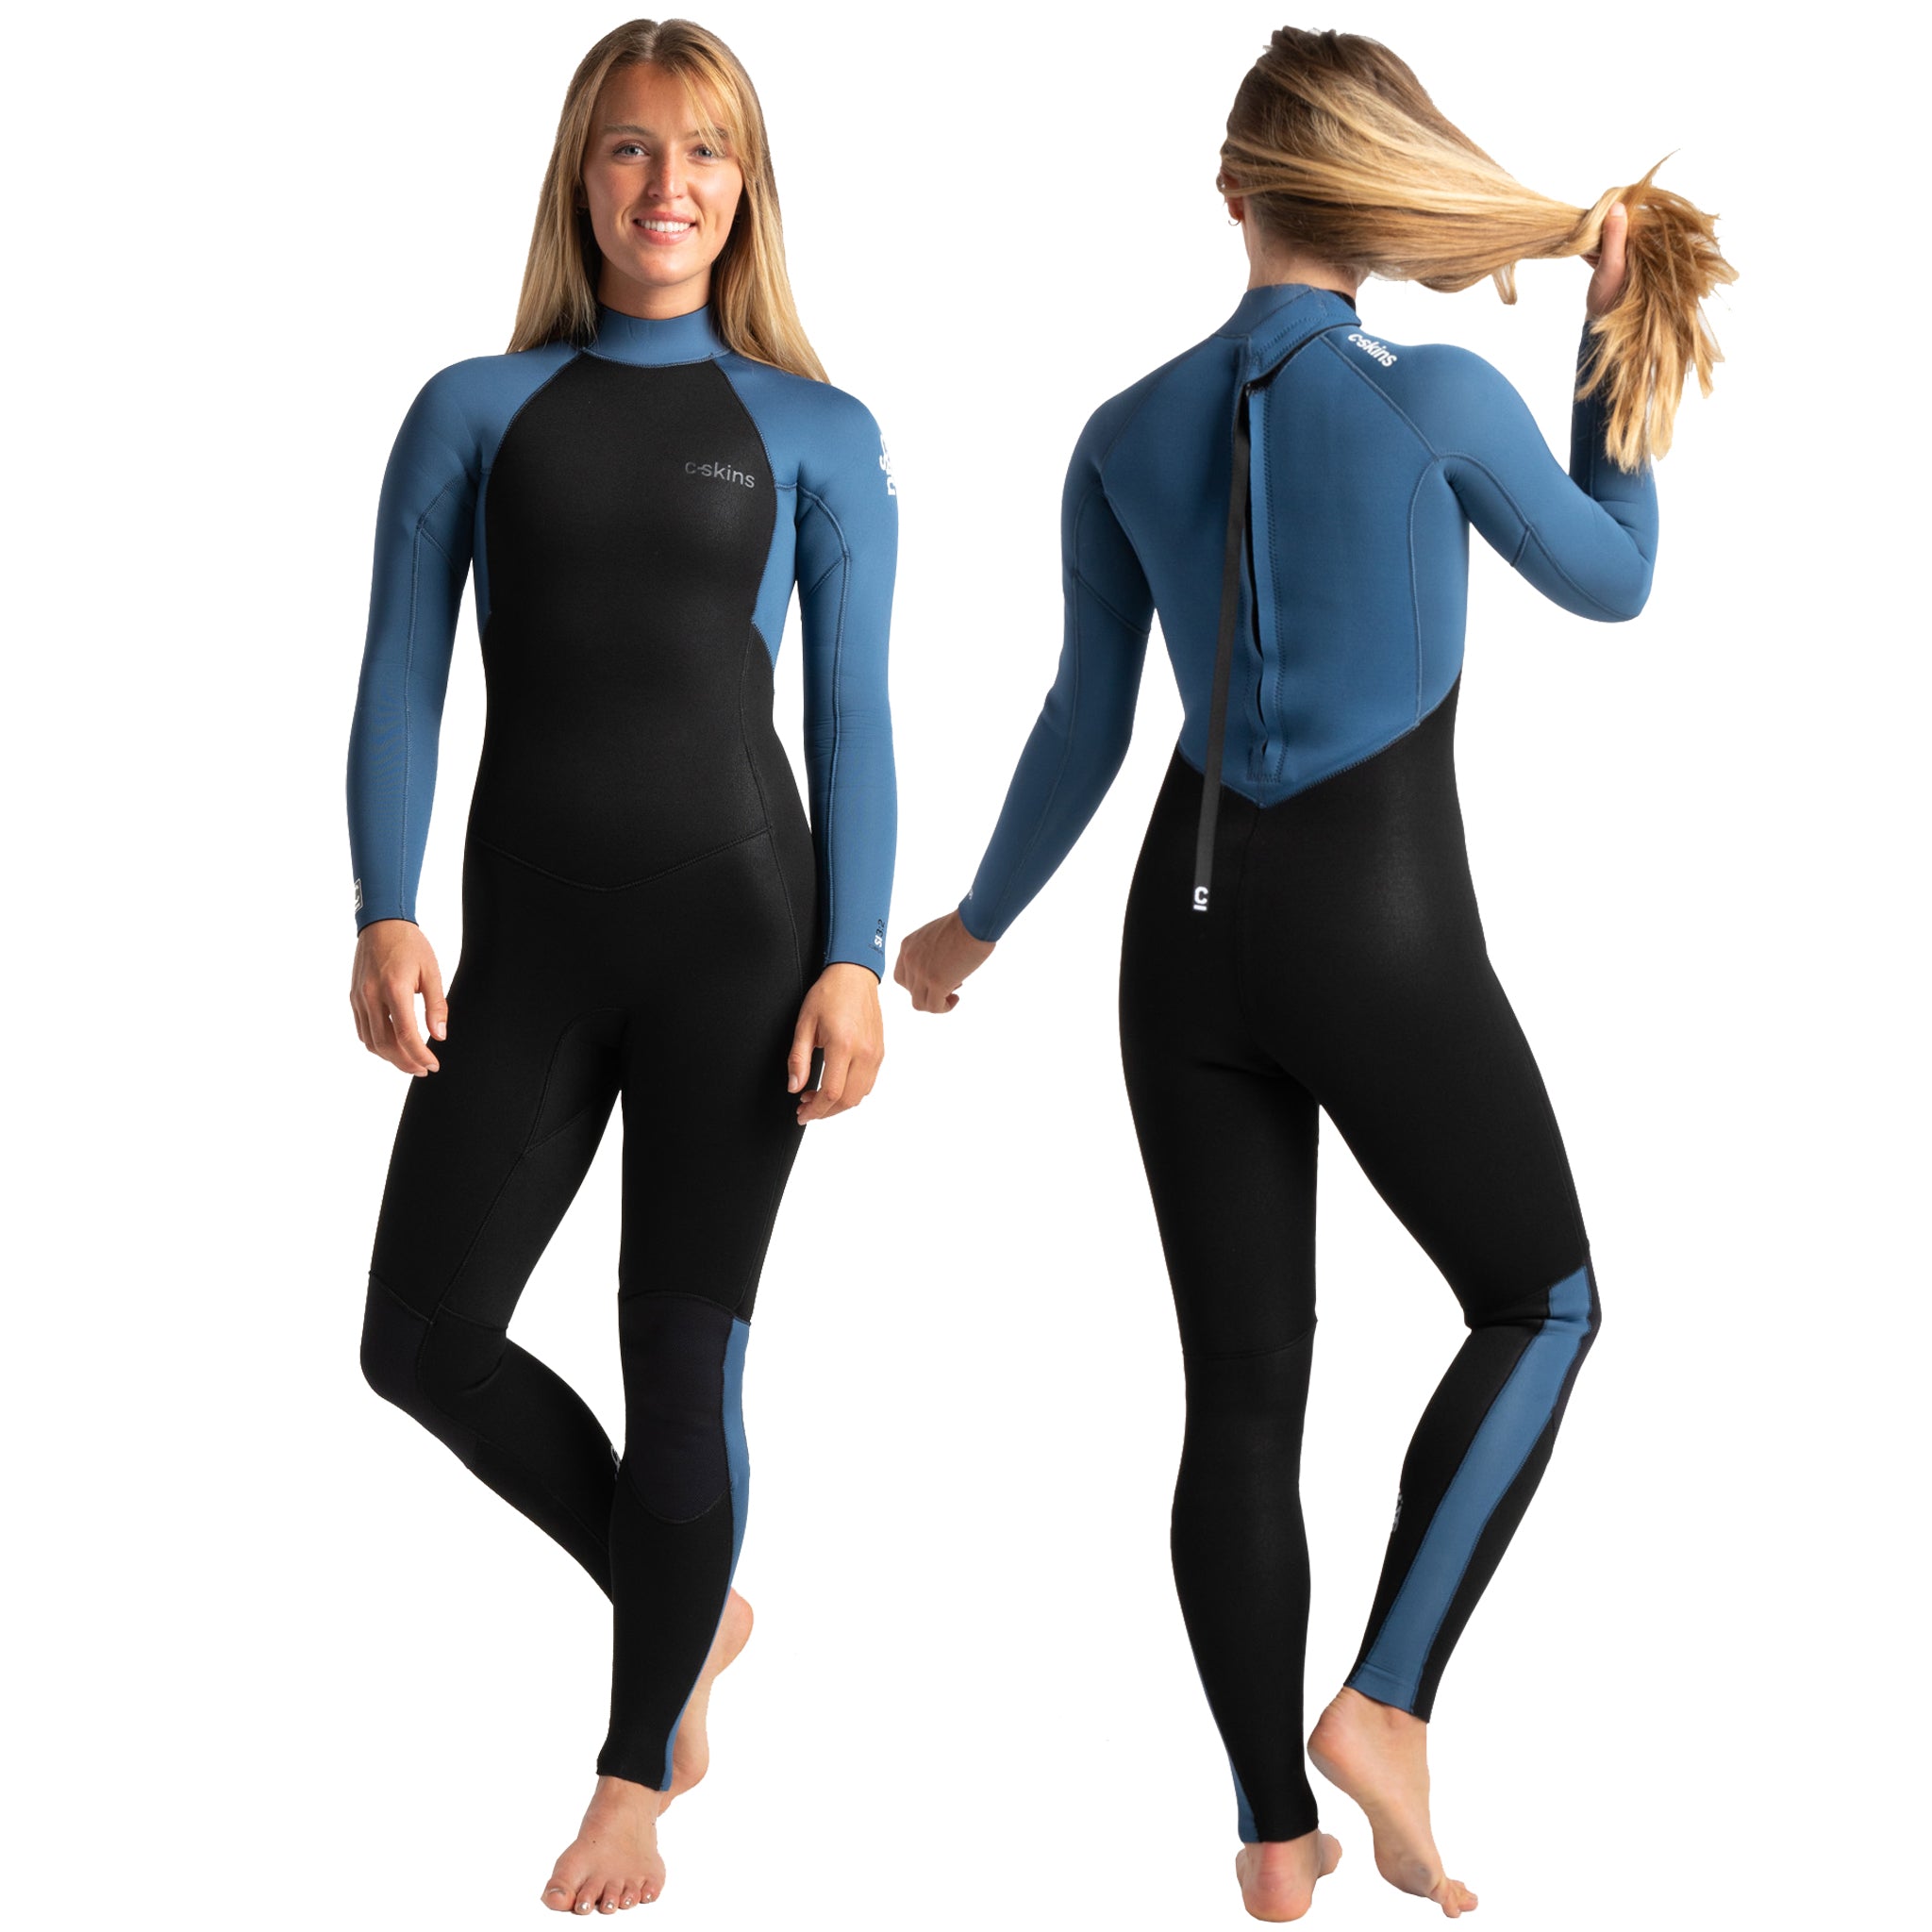 C-Skins Surflite 3/2mm Women's GBS Spring Summer Wetsuit - Black/Cascade Blue/White